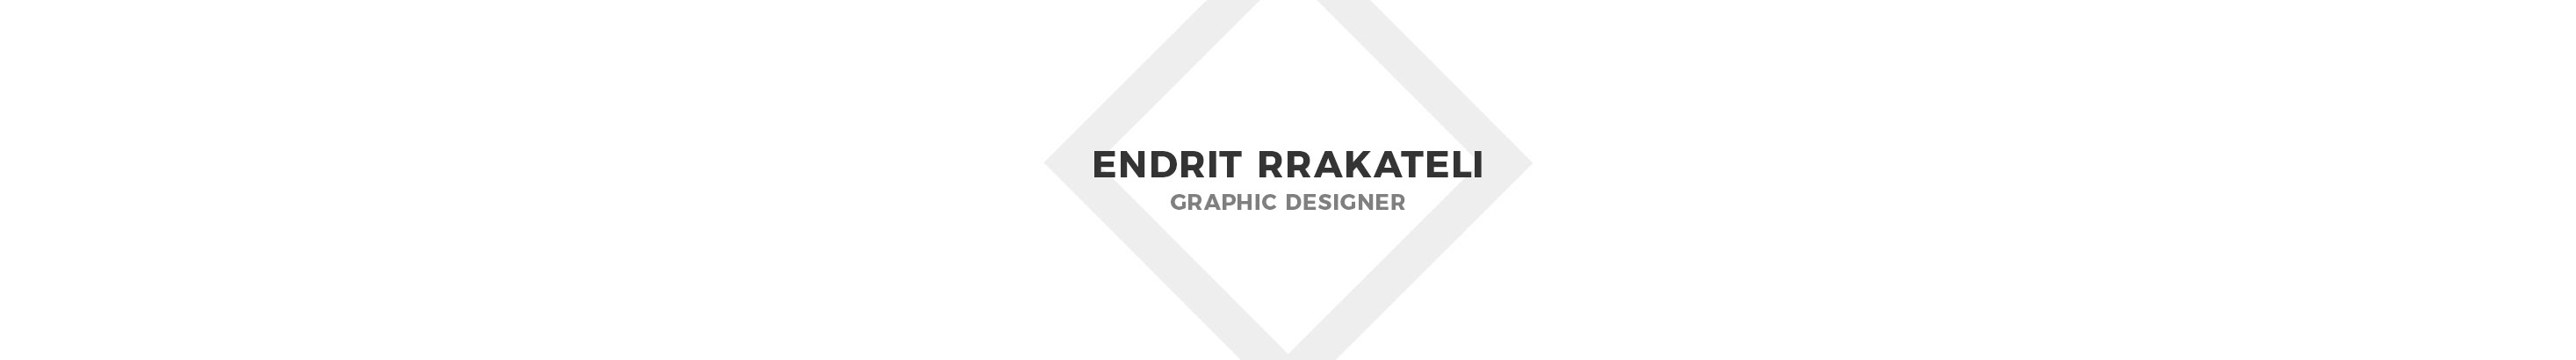 Endrit Rrakateli's profile banner